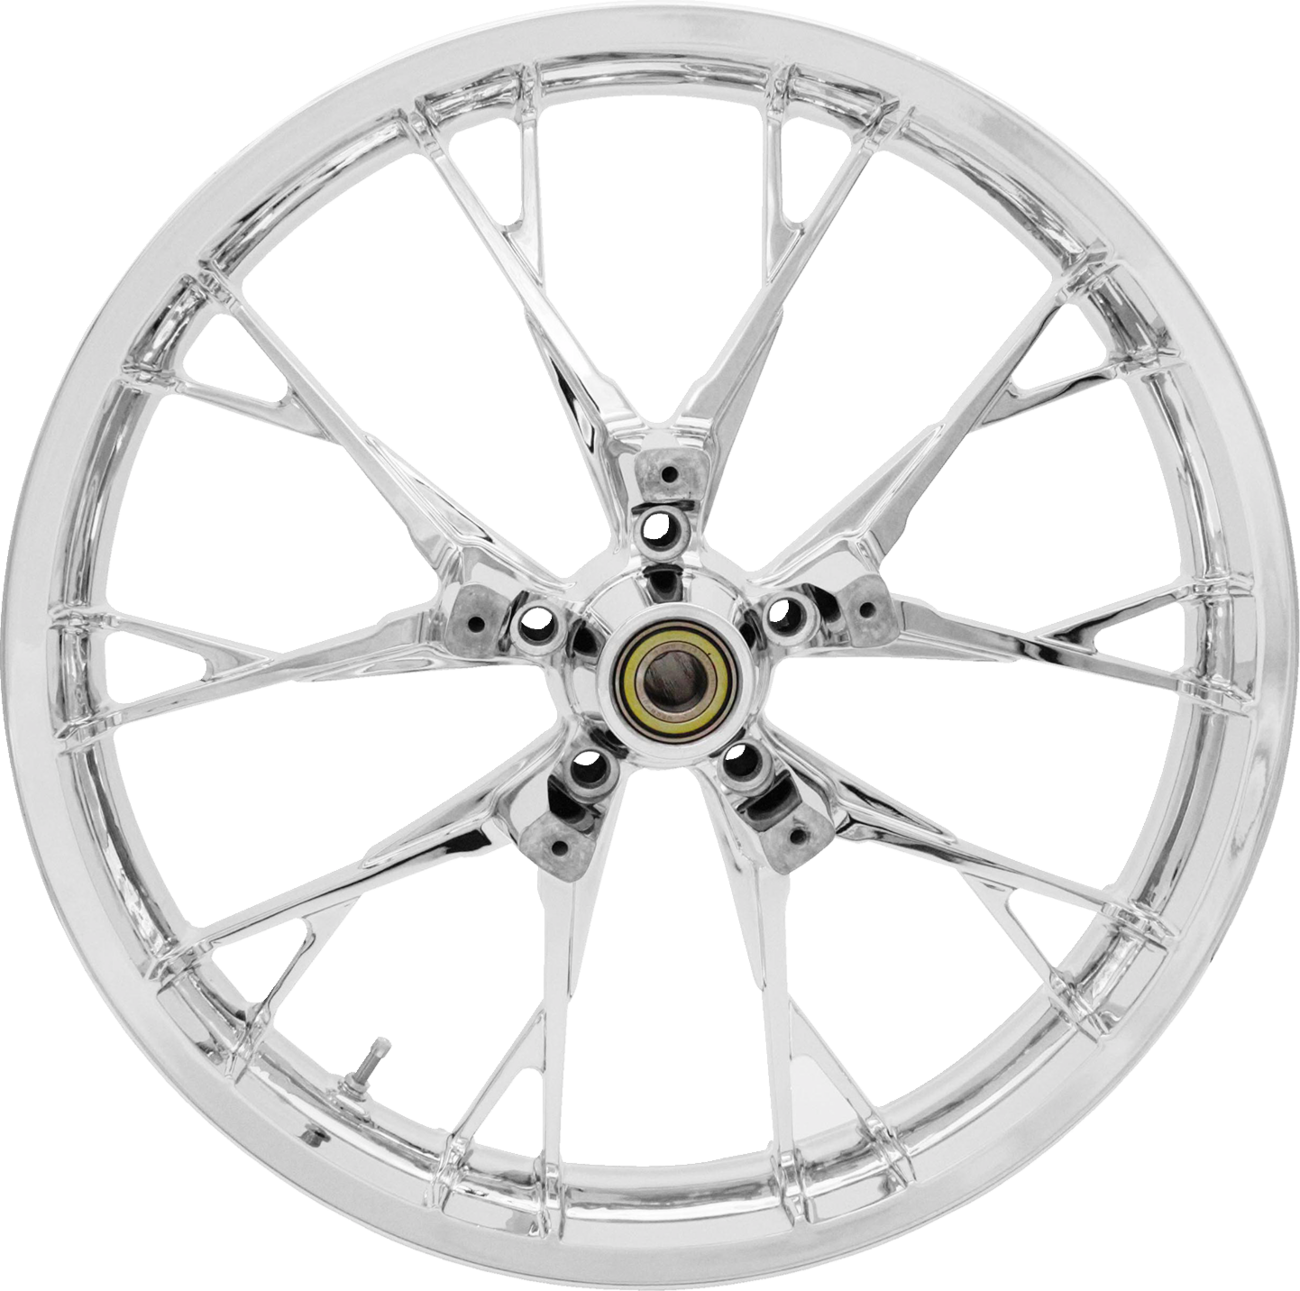 Wheel - Marlin - Rear - Single Disc/ABS - Solid Black - 18"x5.50"